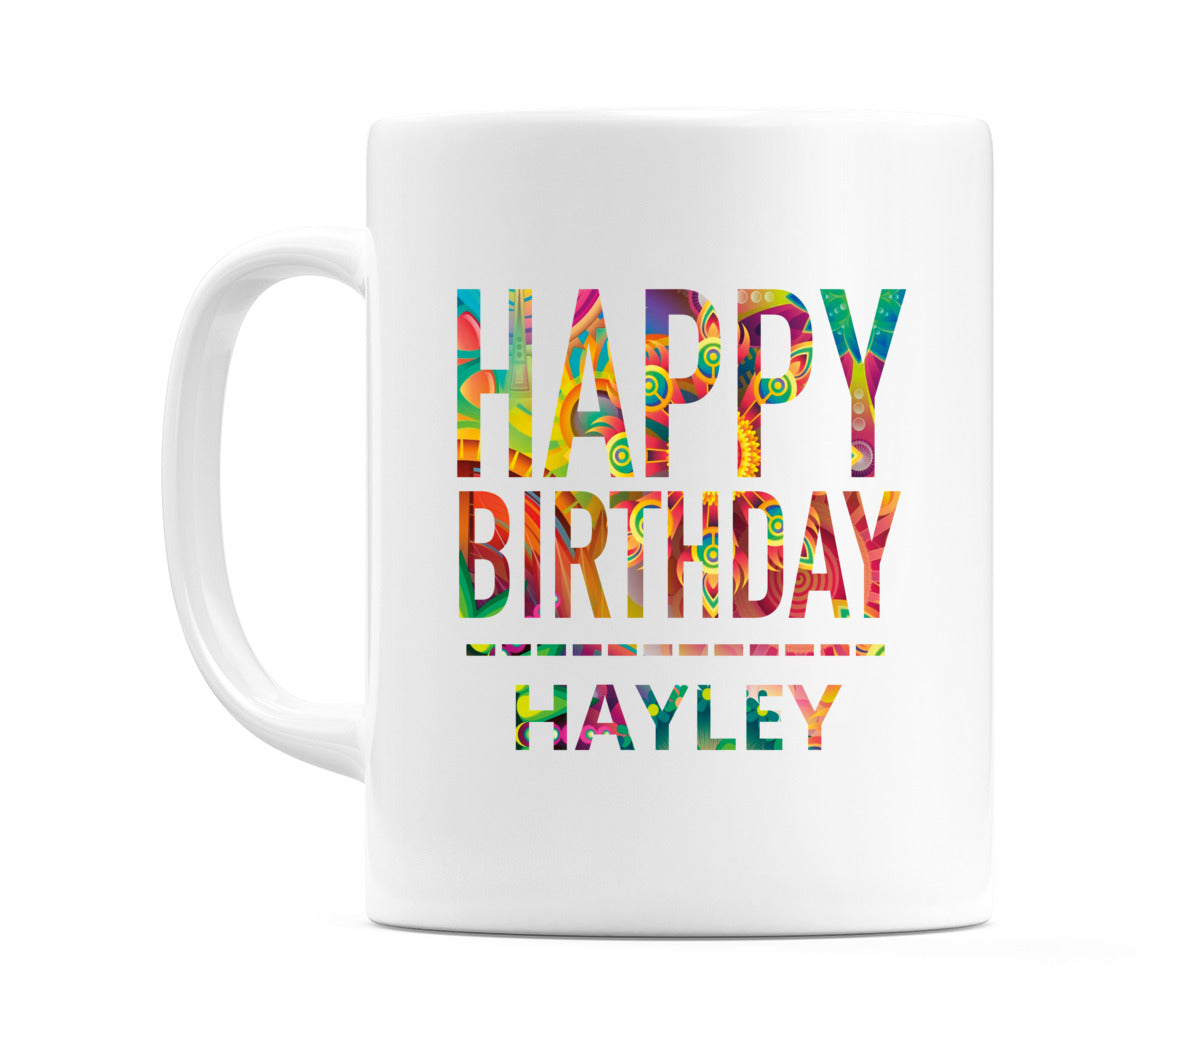 Happy Birthday Hayley (Tie Dye Effect) Mug Cup by WeDoMugs